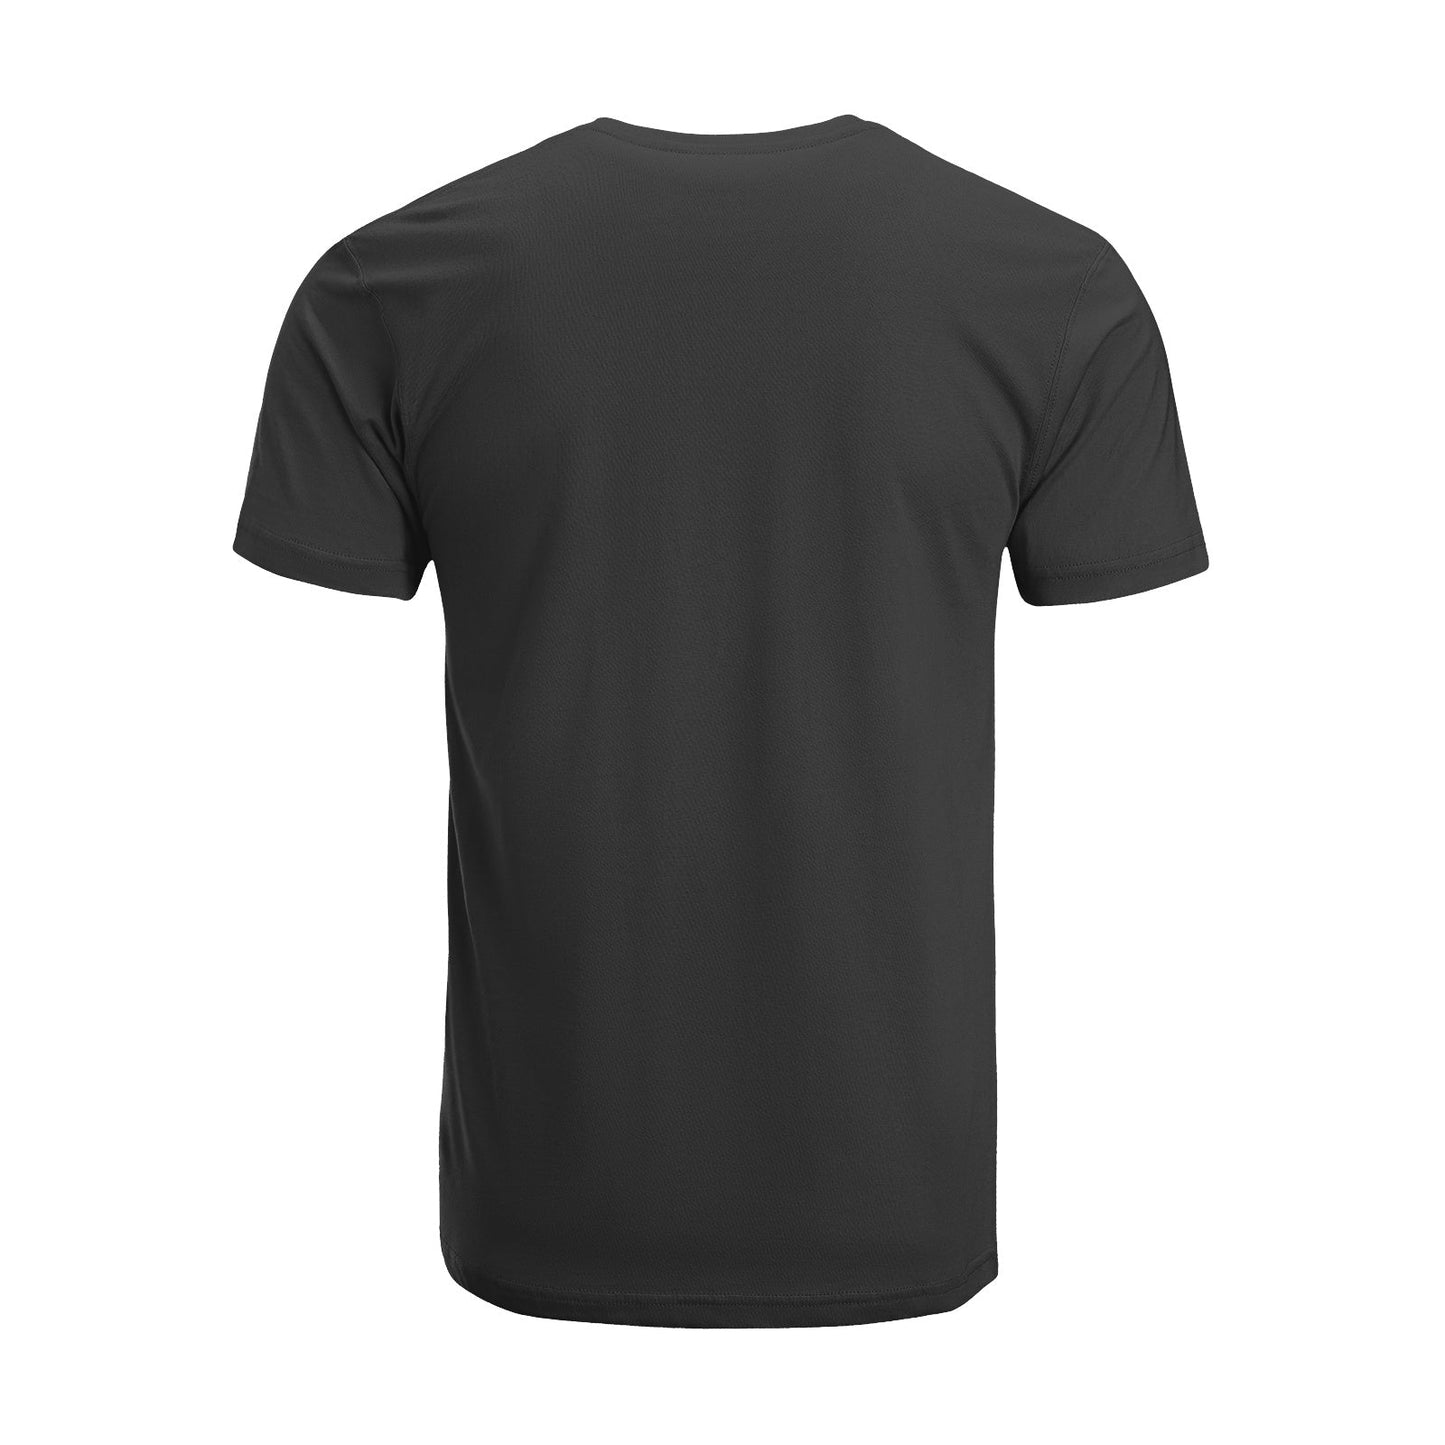 Unisex Short Sleeve Crew Neck Cotton Jersey T-Shirt Gym No. 09 - Tara-Outfits.com